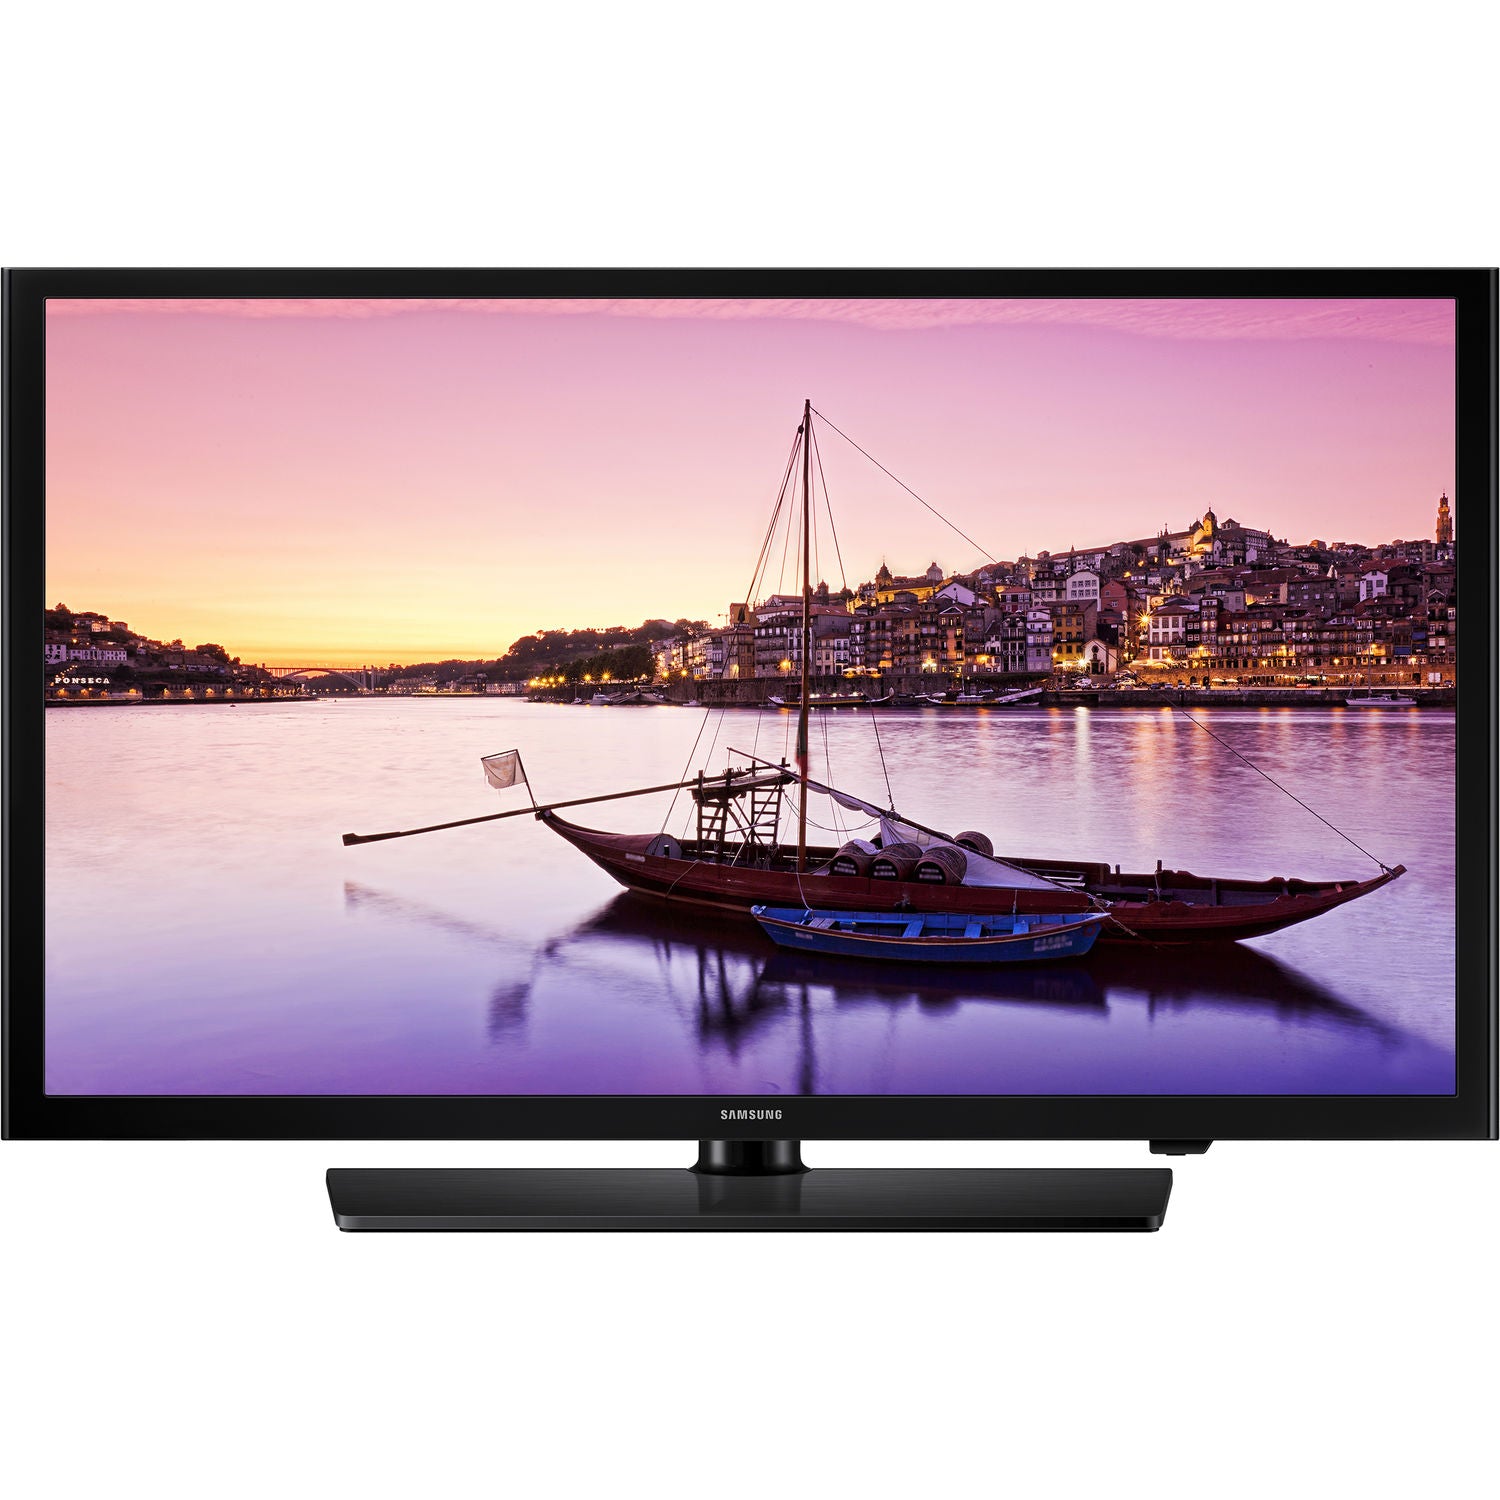 Samsung HG43NE590SFXZA 43" Full HD Slim Direct-Lit LED Hospitality Smart TV with Built-in Wi-Fi (Black) - Samsung Parts USA